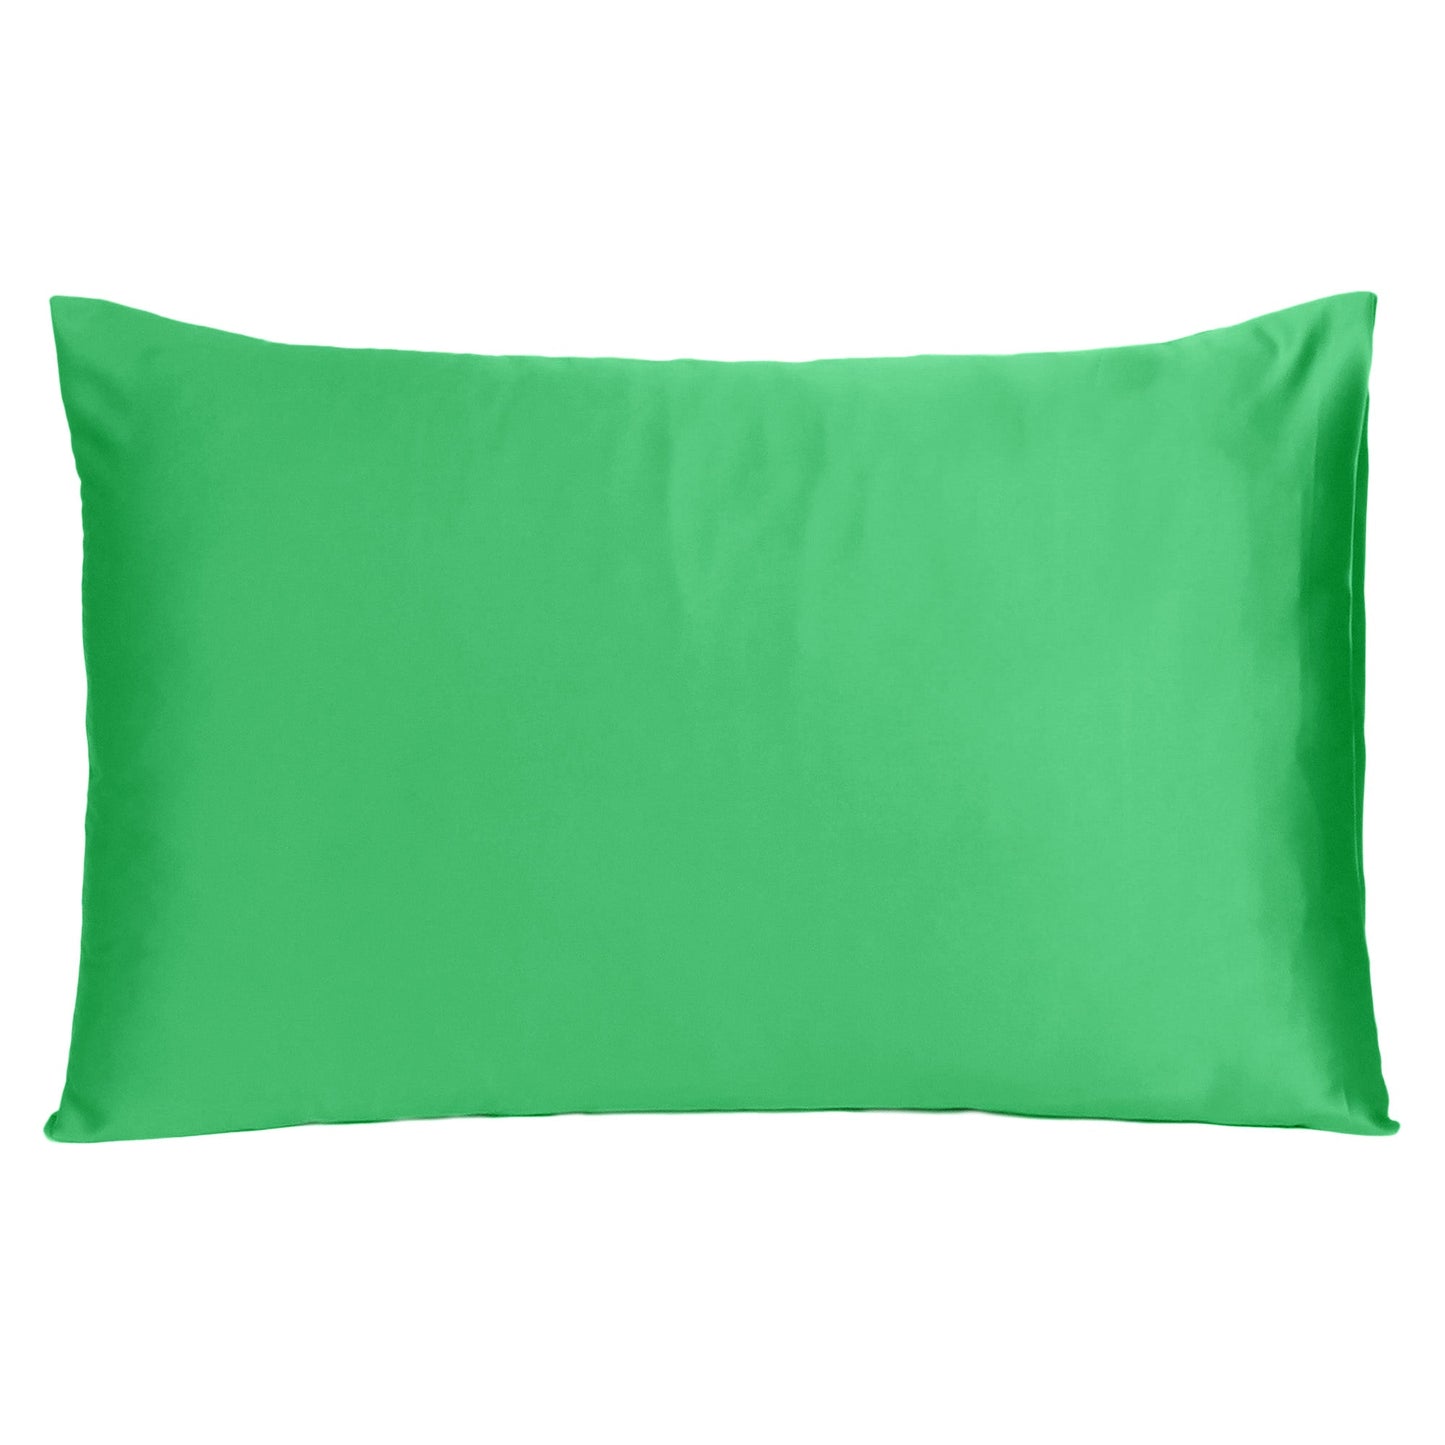 Luxury Soft Plain Satin Silk Pillowcases in Set of 2 - Jelly Bean